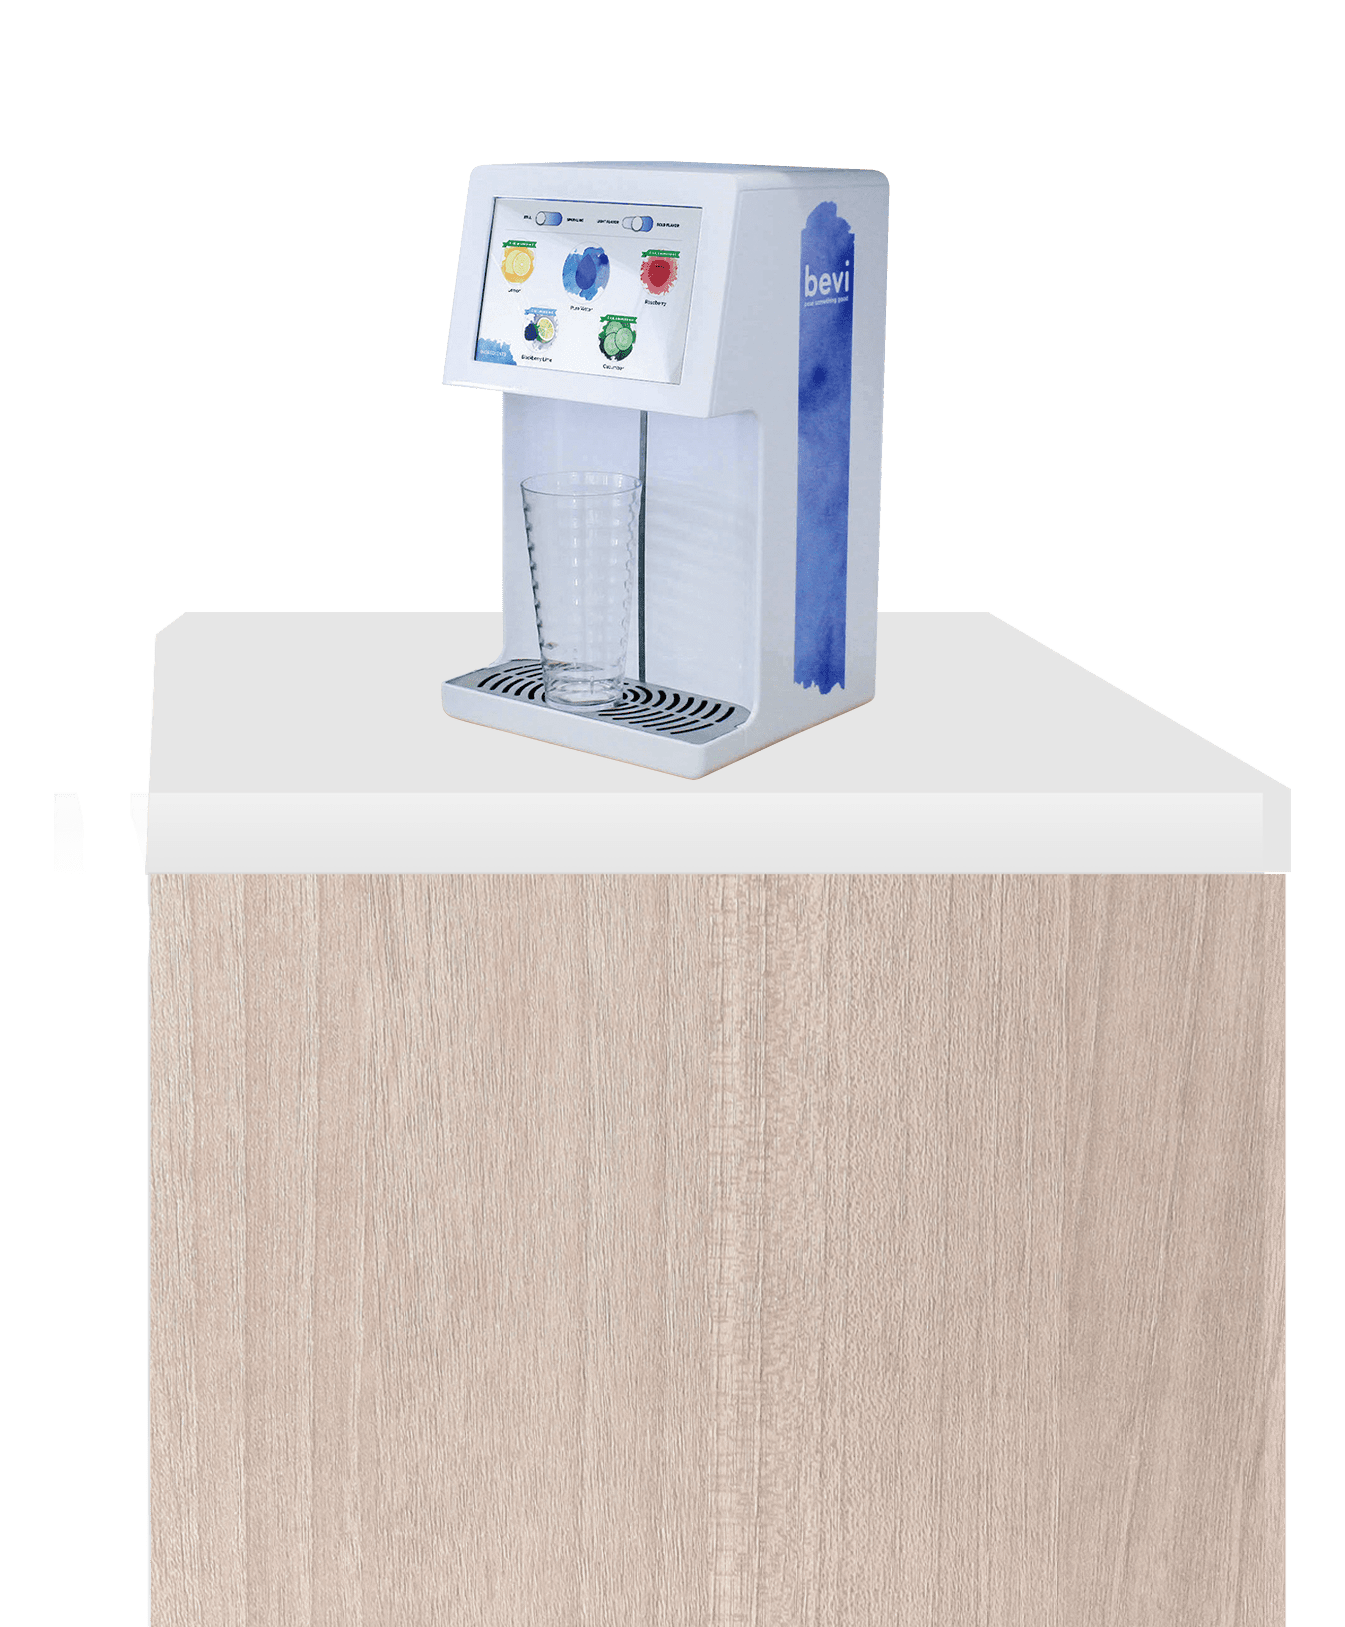 bevi countertop sparkling water machine